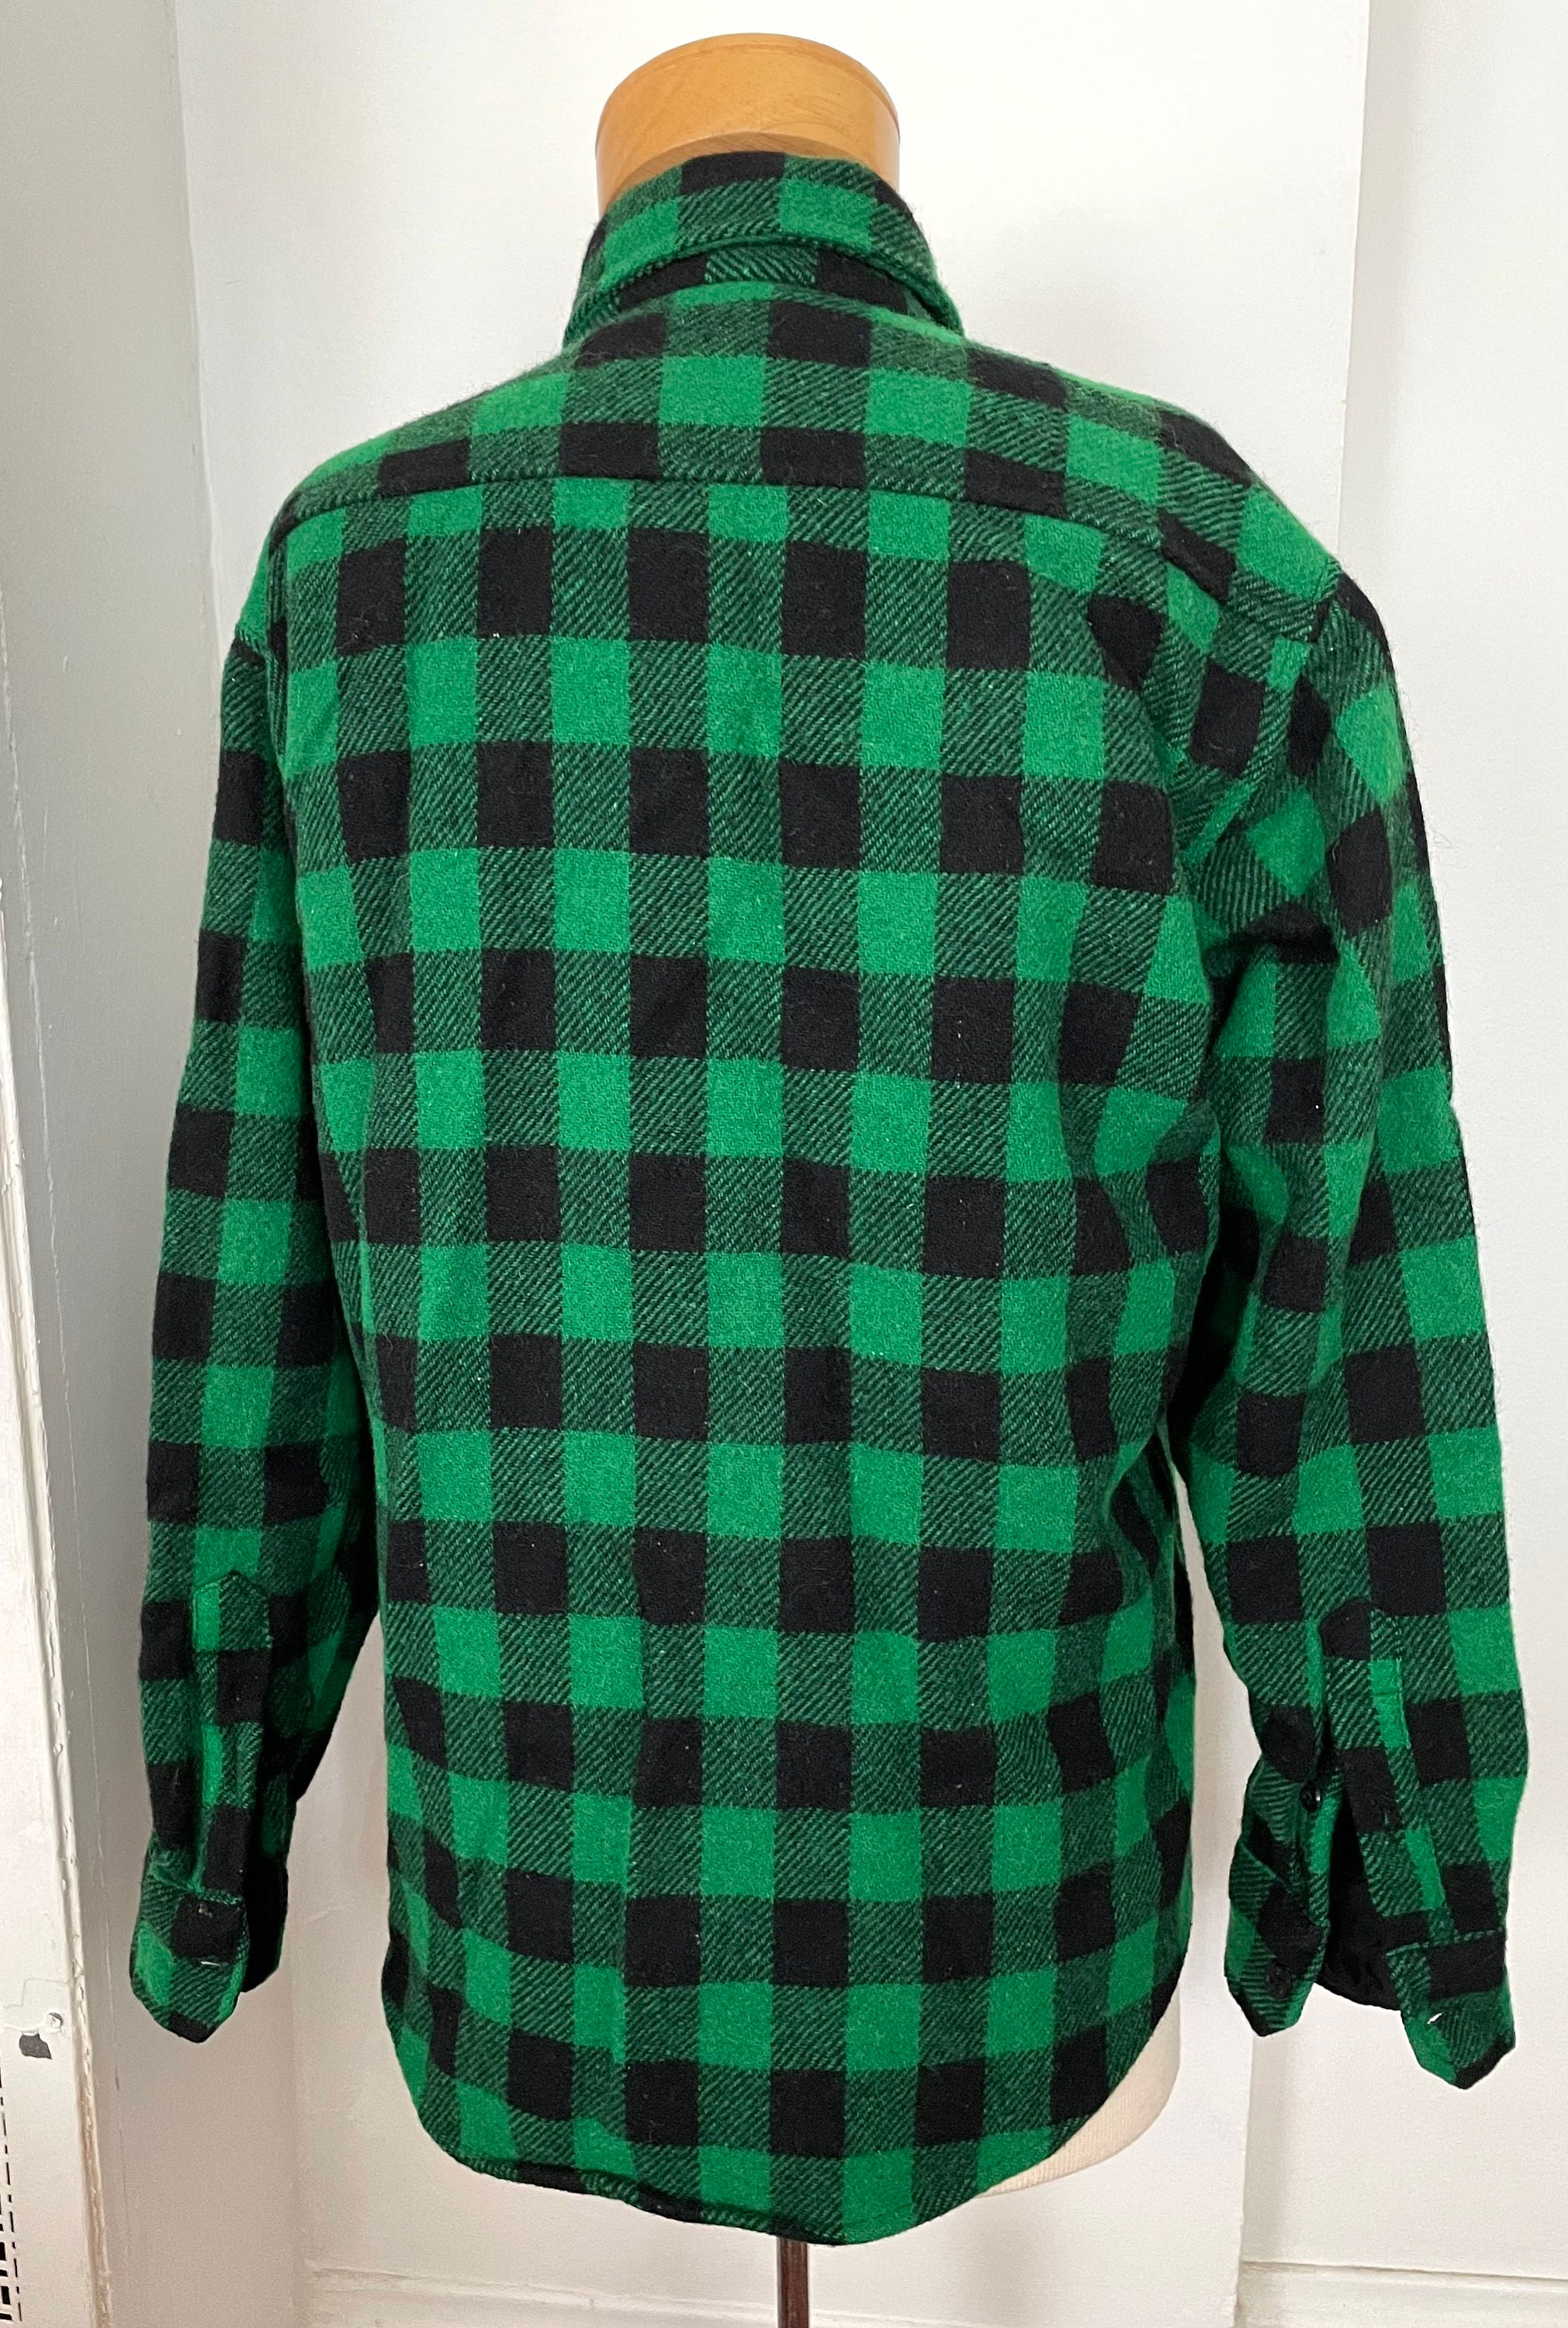 Vintage buffalo check shirt jacket green black plaid wool | Etsy